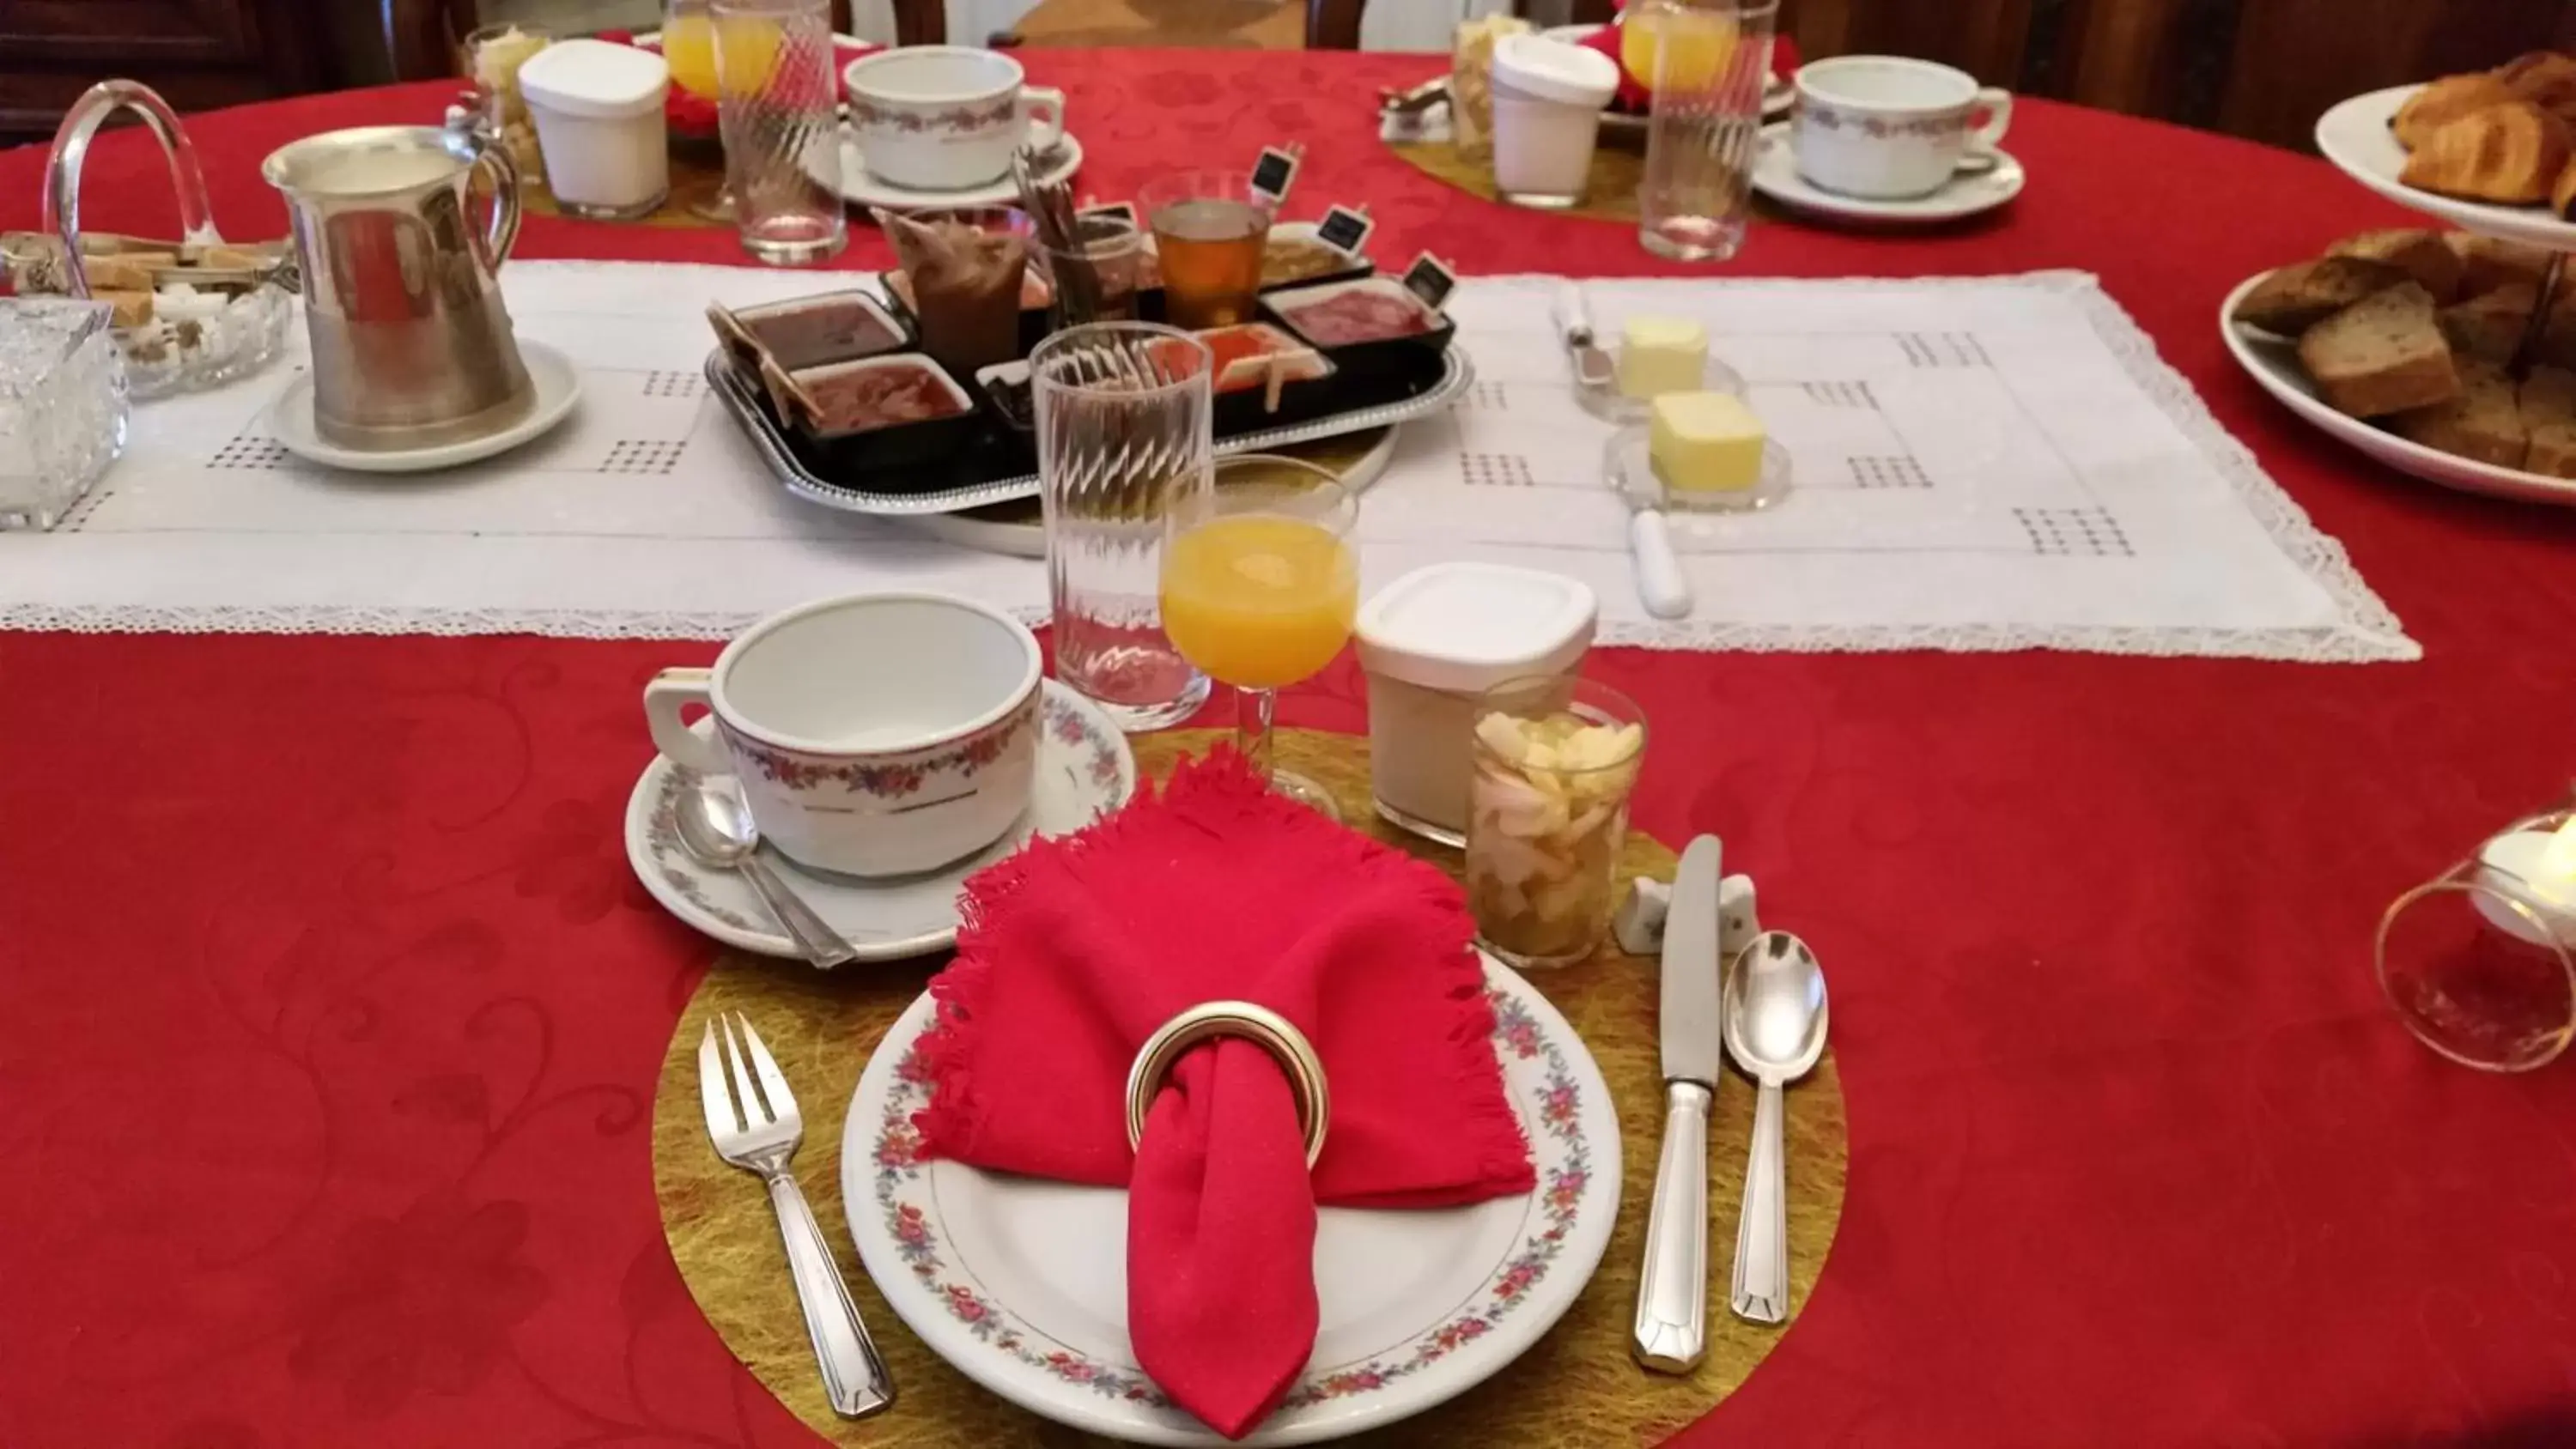 Buffet breakfast in Le Clos de La Muse